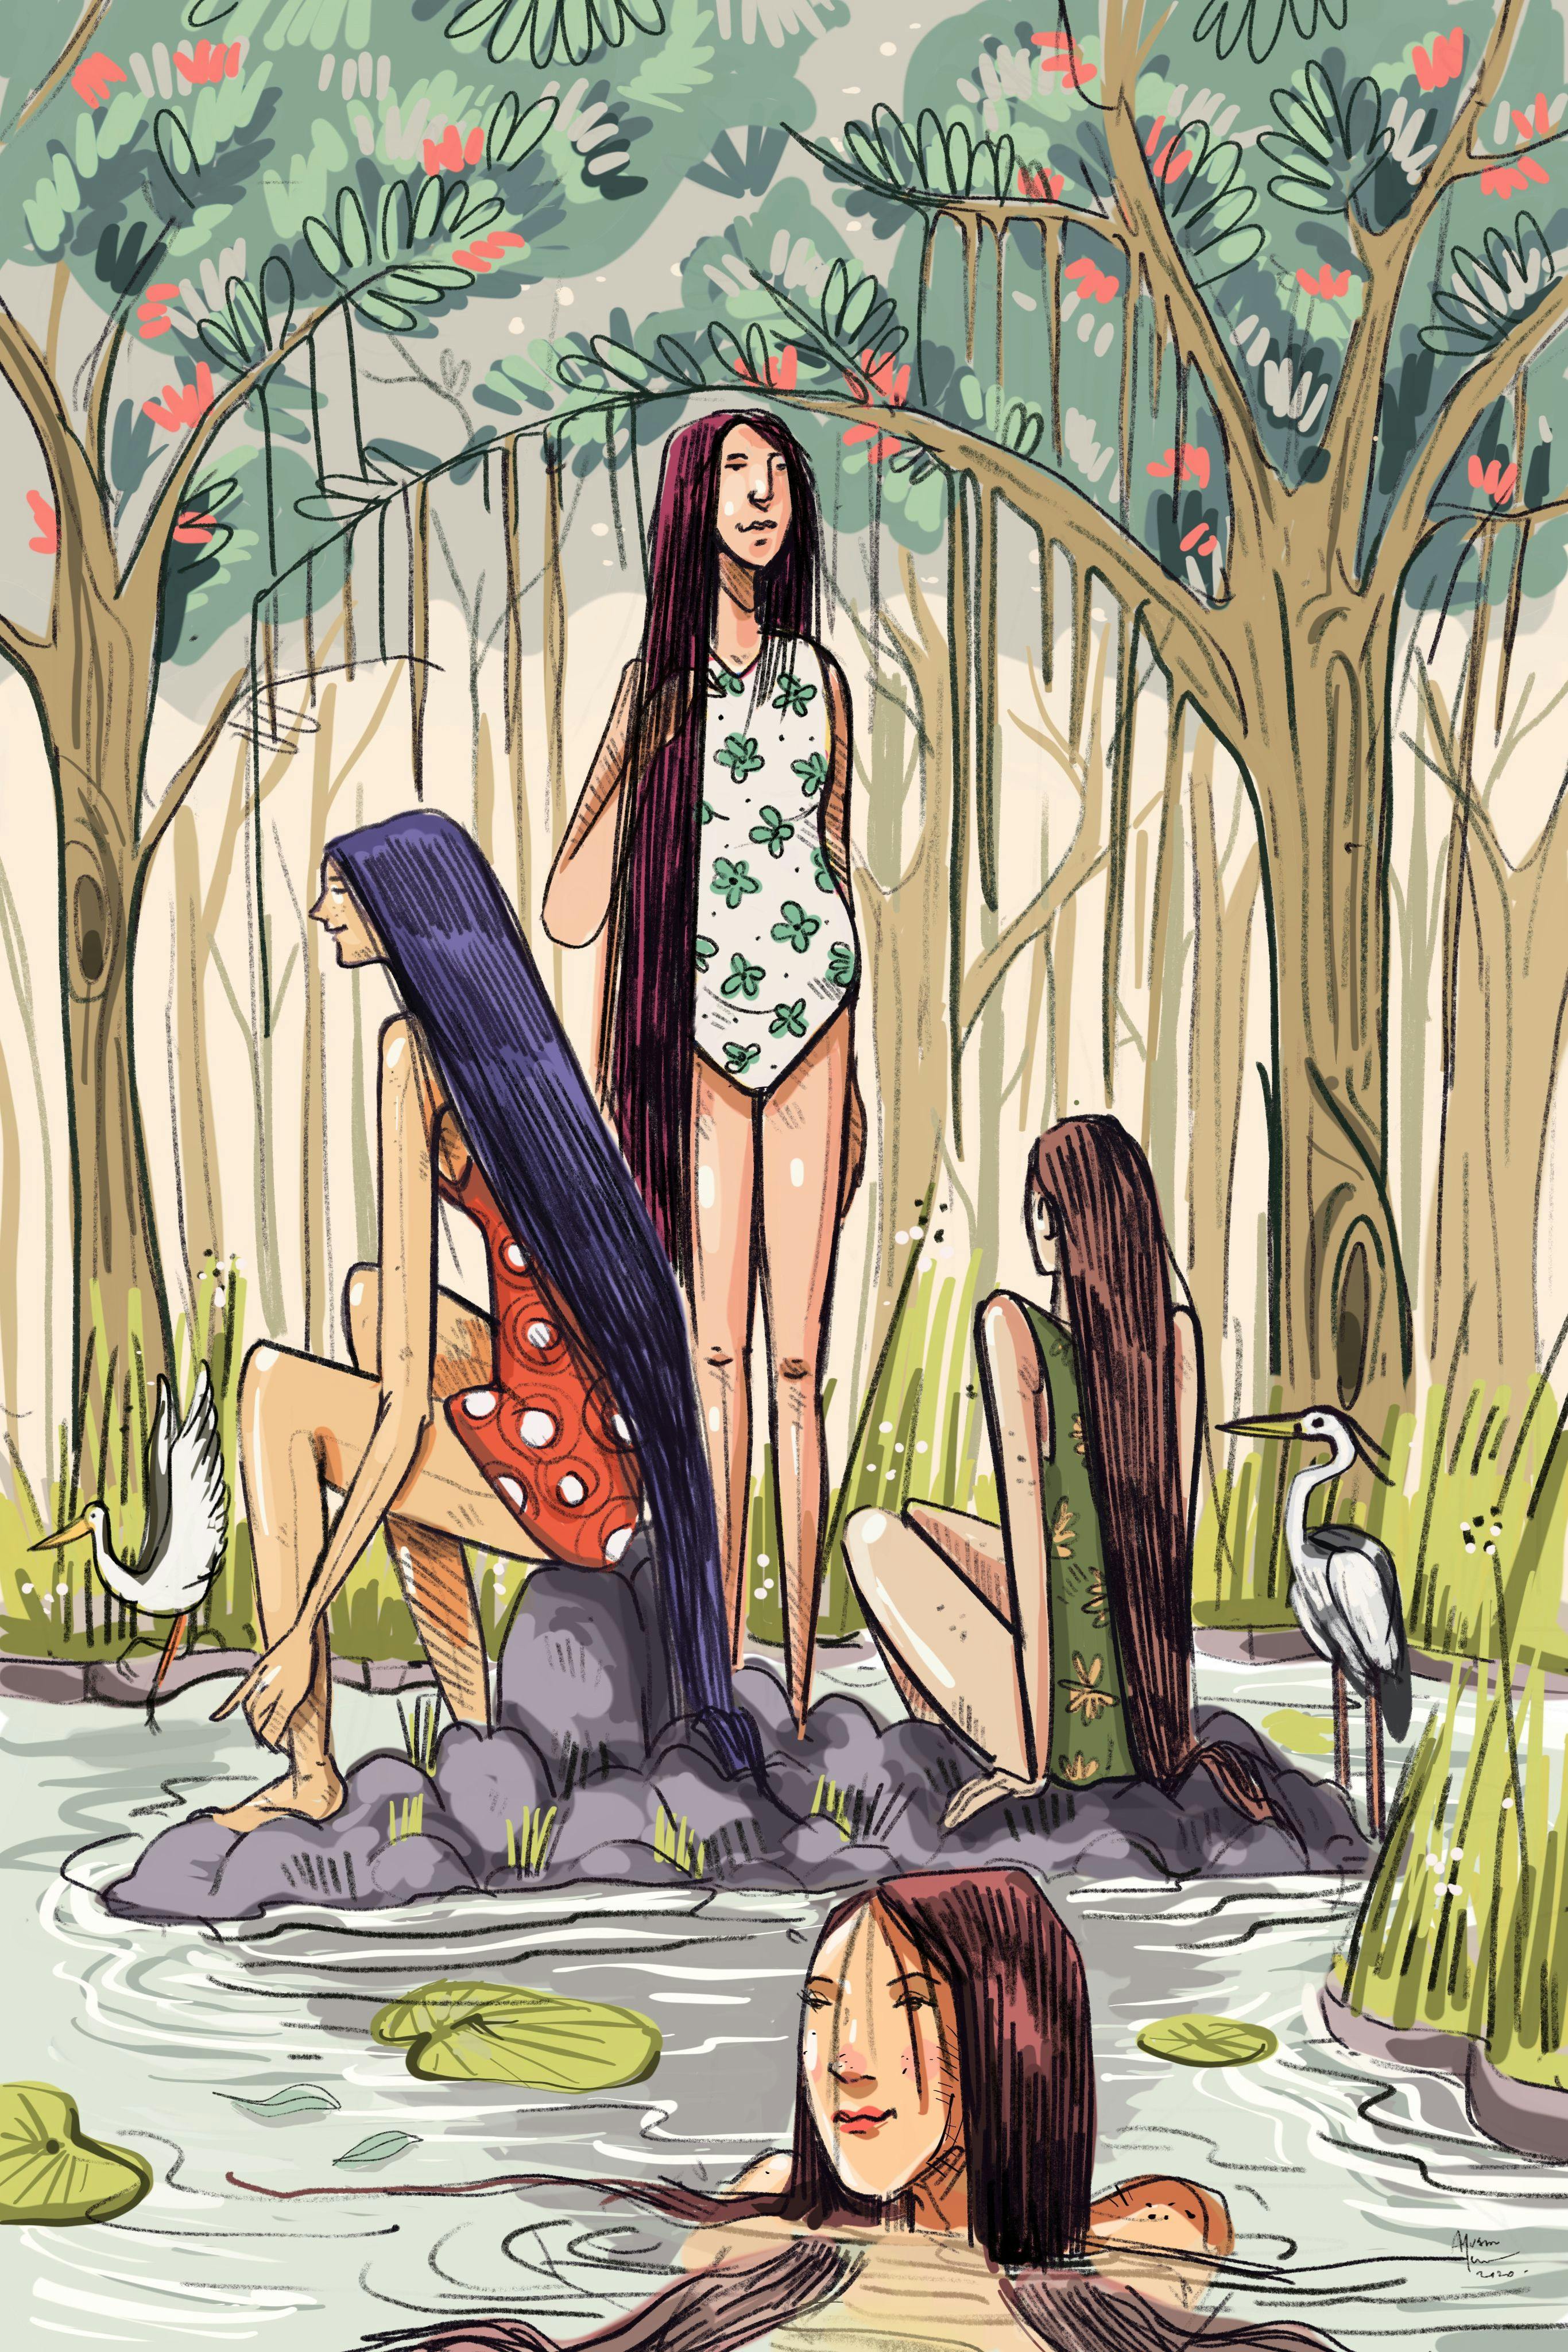 Women bathing in the forest